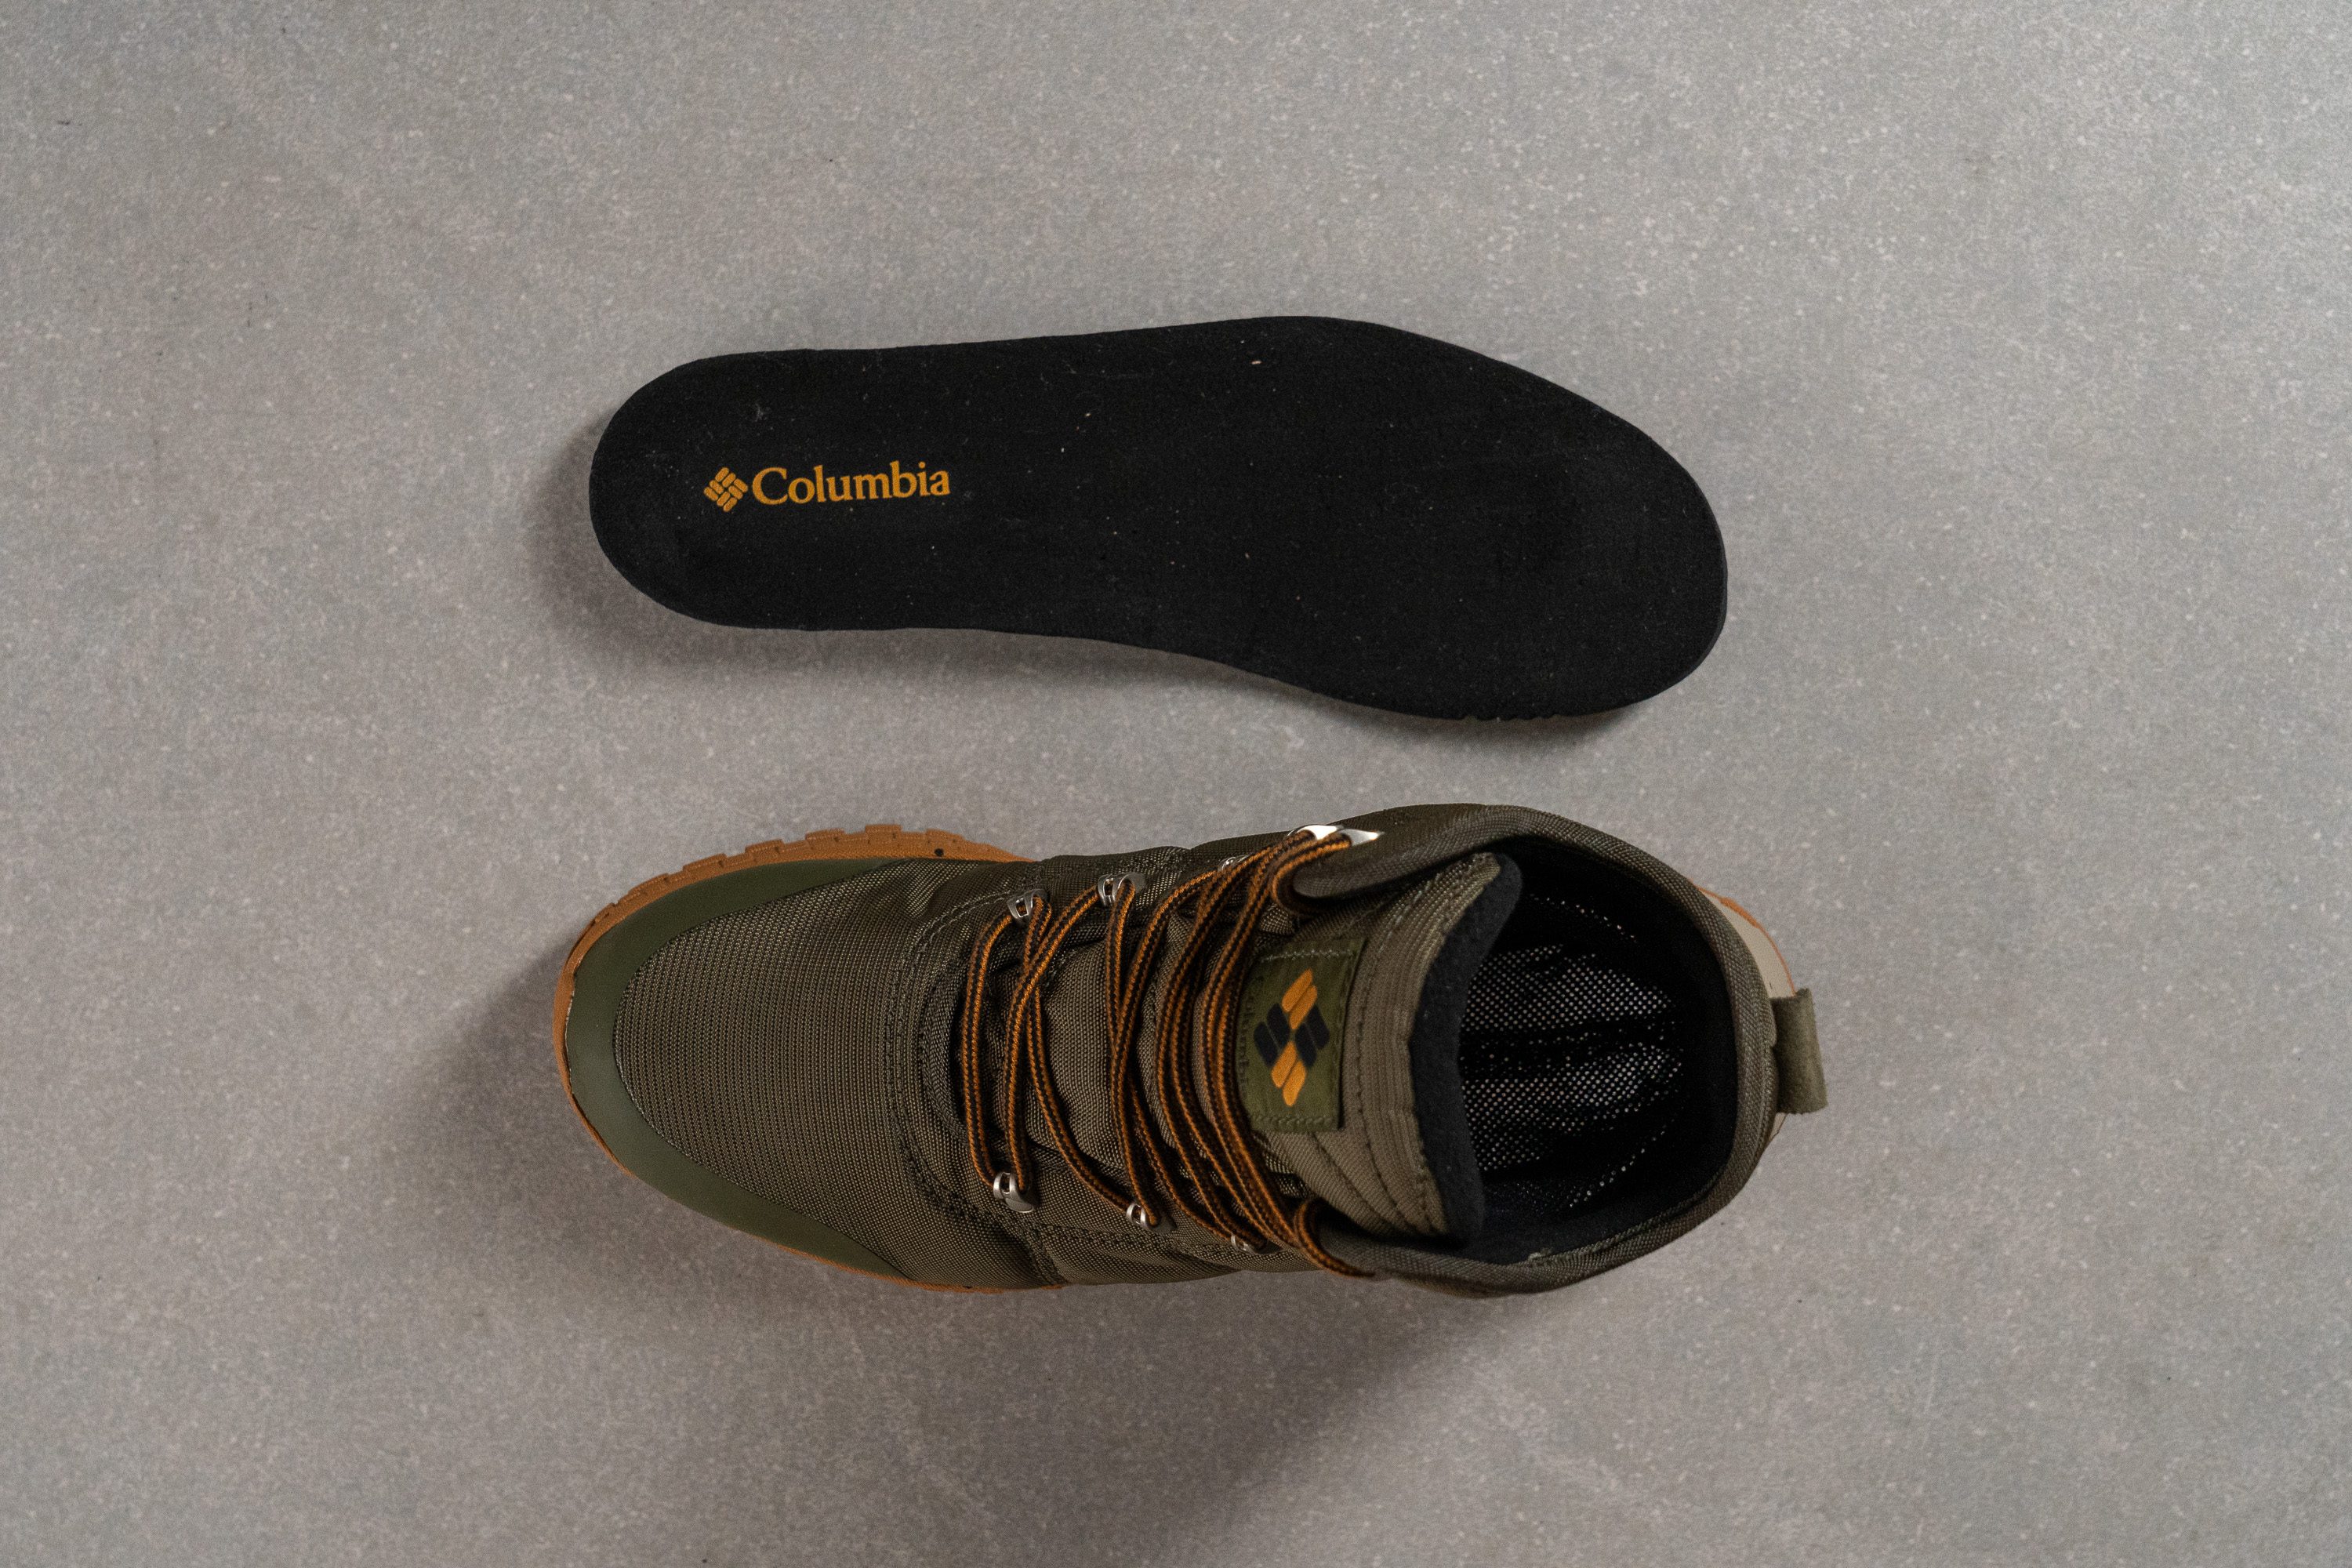 Columbia zapatillas de running Adidas hombre pista talla 33.5 Removable insole